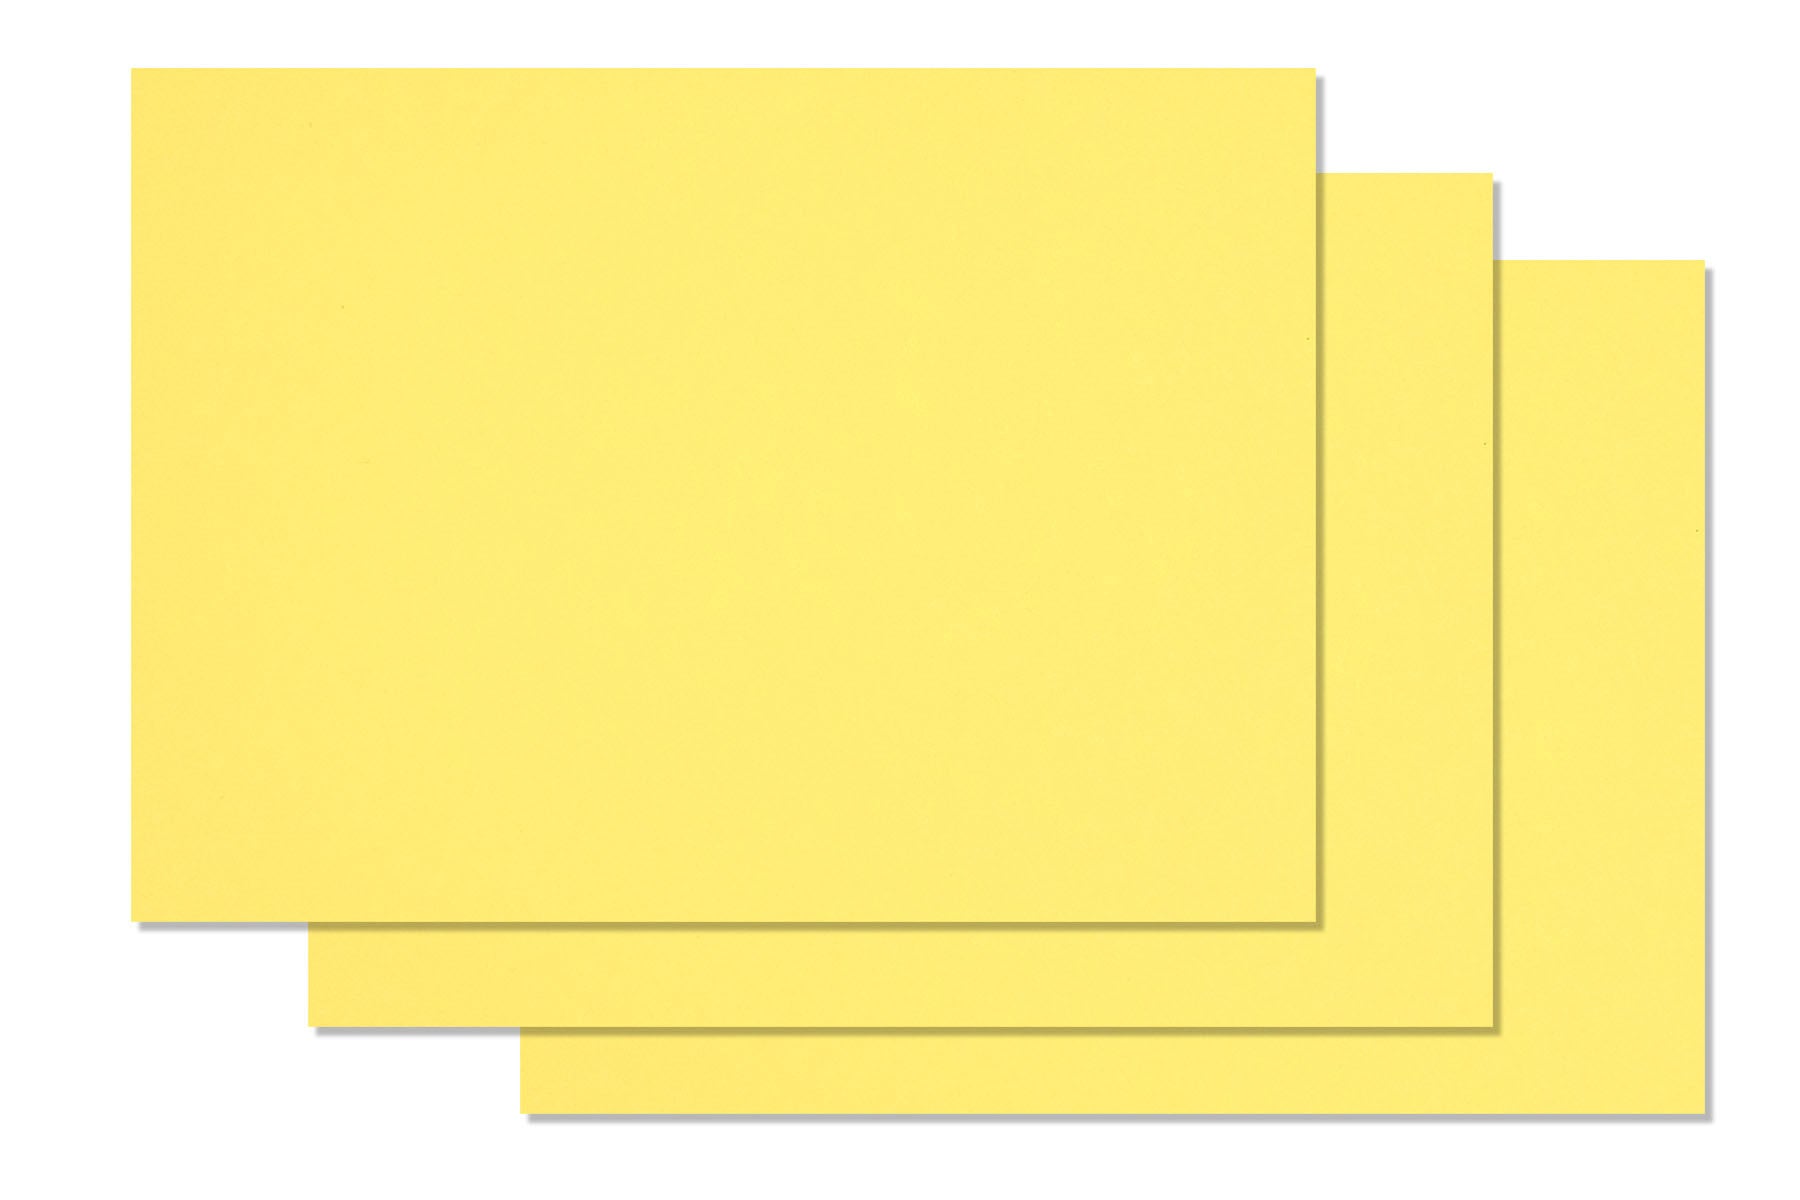 Spanish Stripe Yellow notebook square, Zazzle